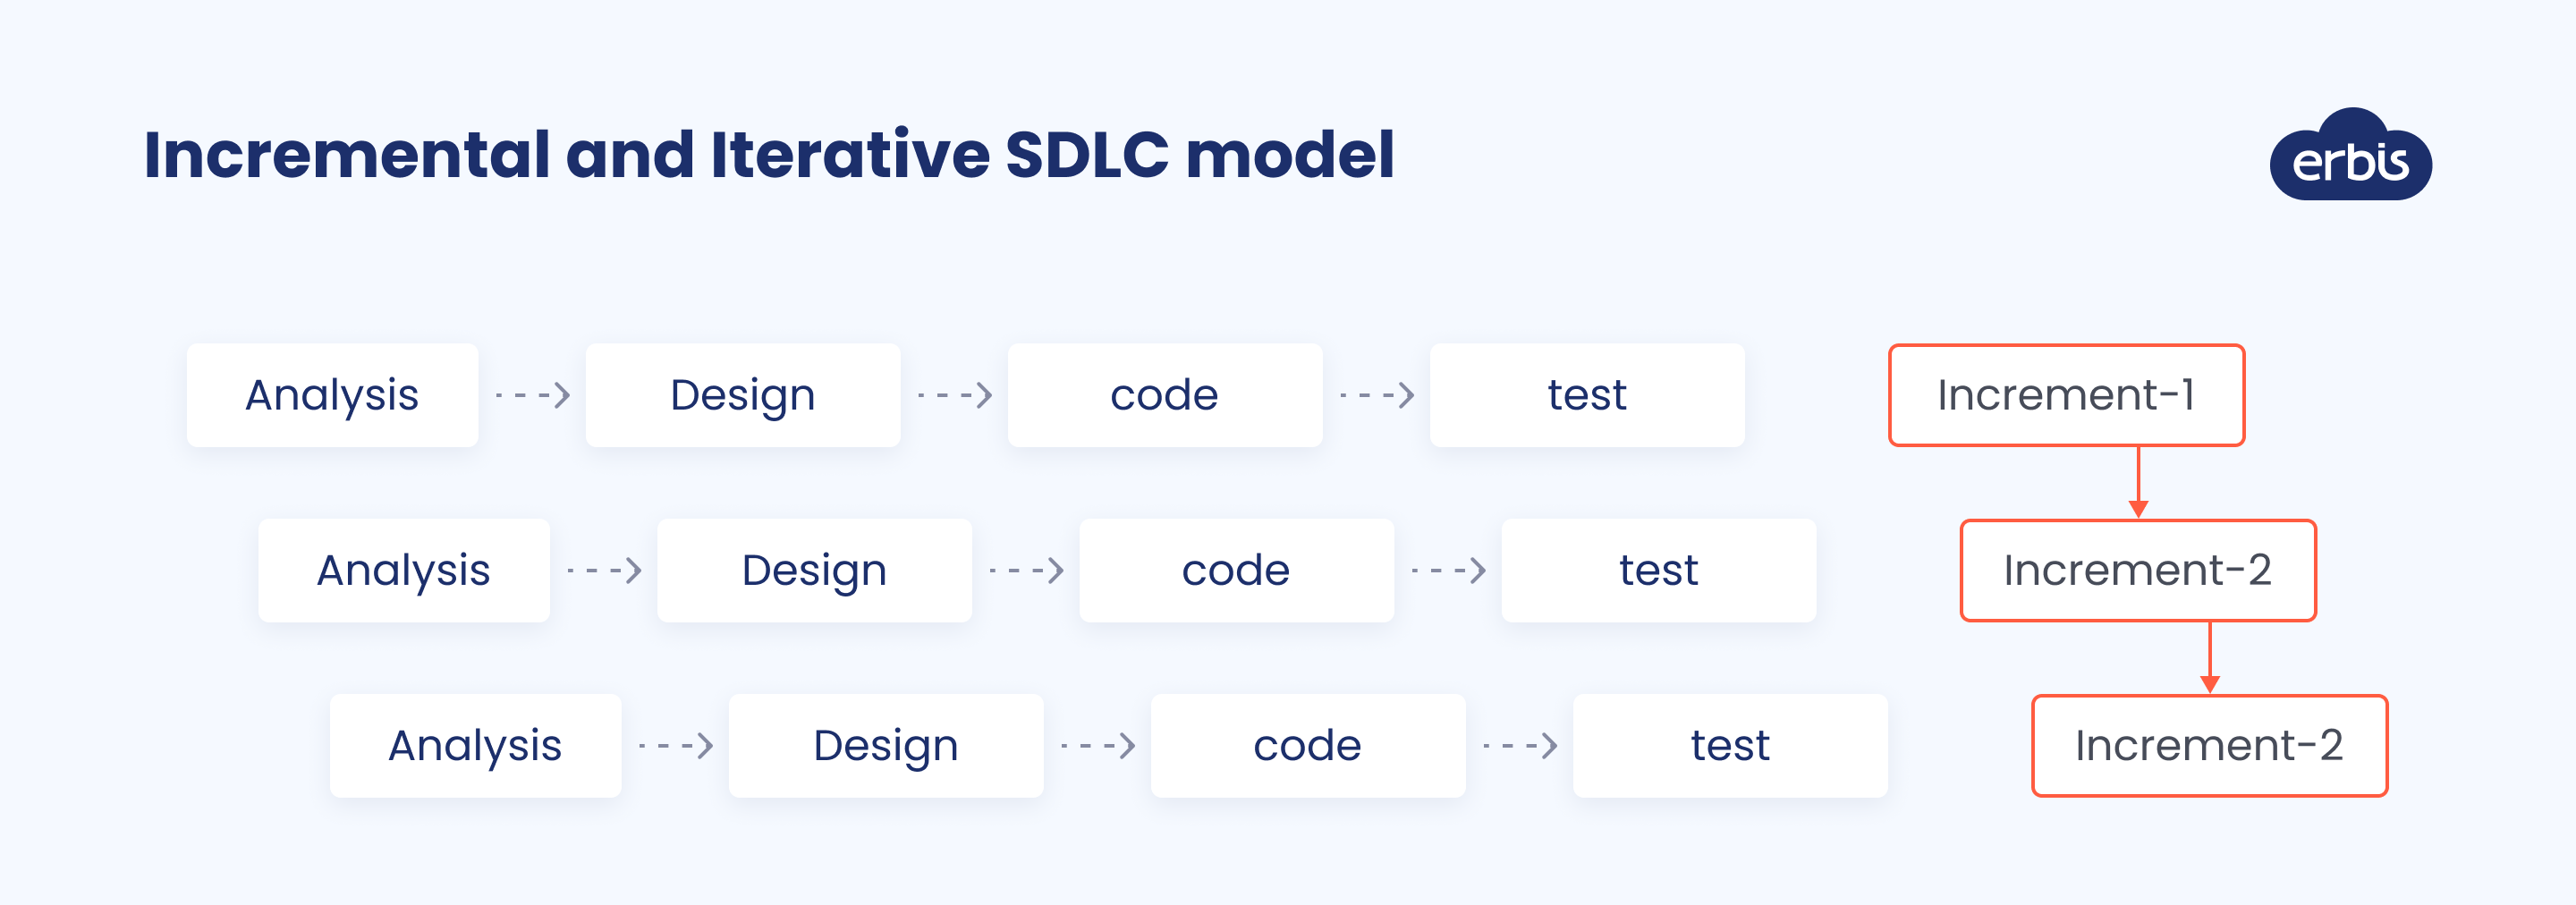 Incremental and Iterative SDLC model